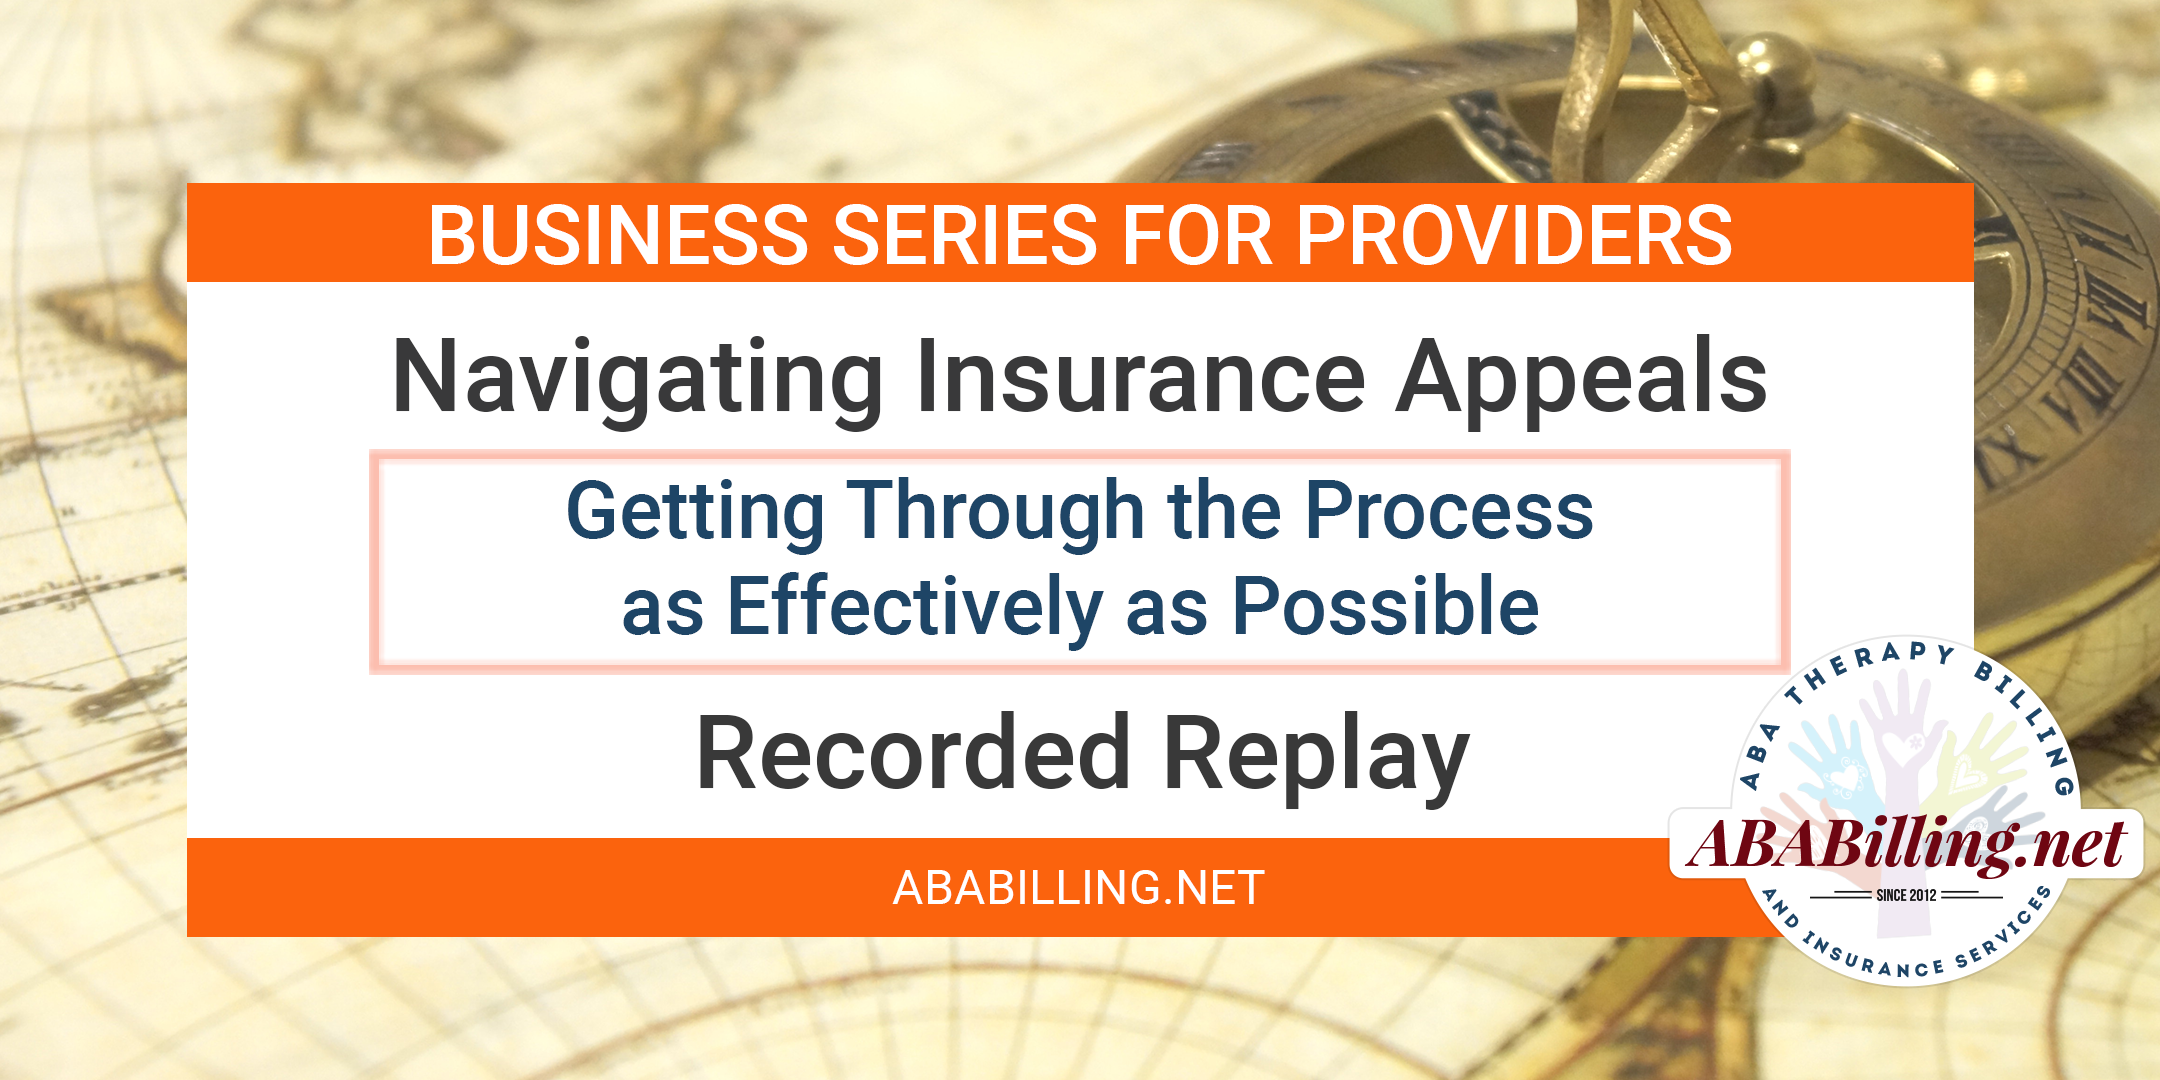 Webinar: Navigating Insurance Appeals